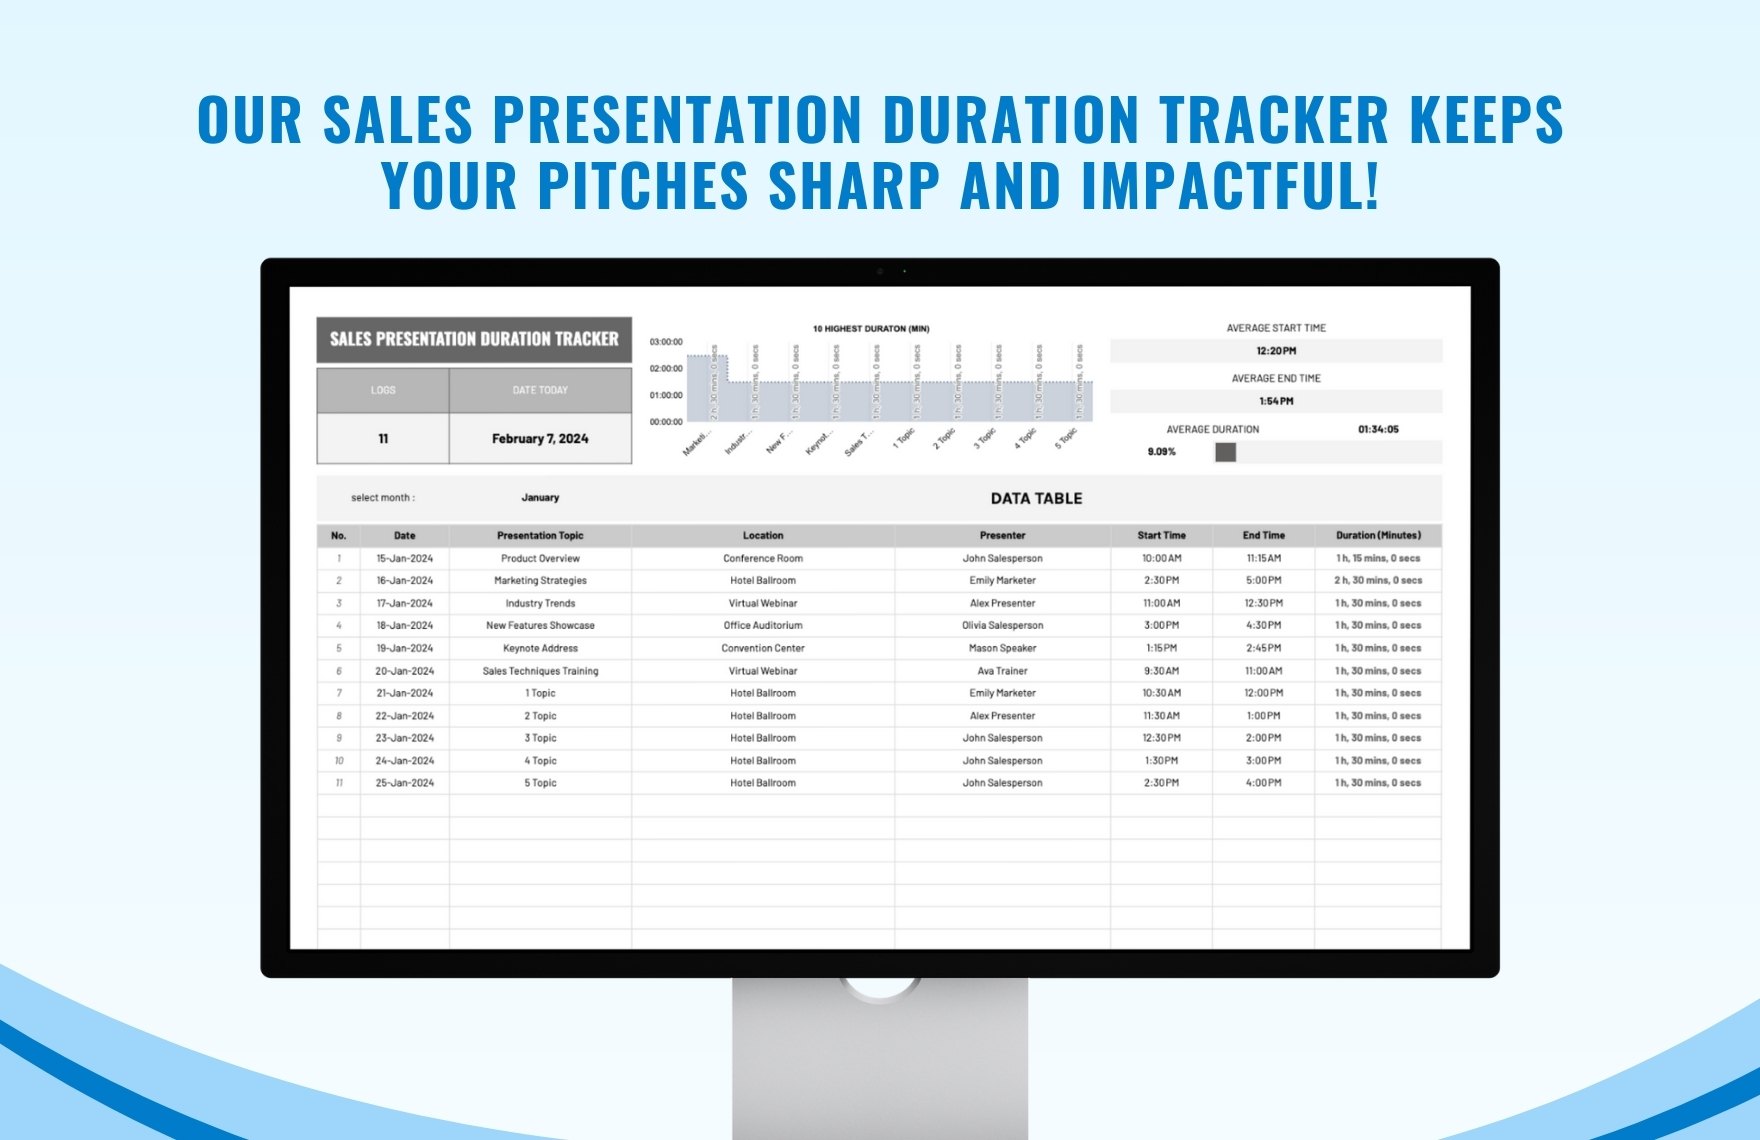 Sales Presentation Duration Tracker Template